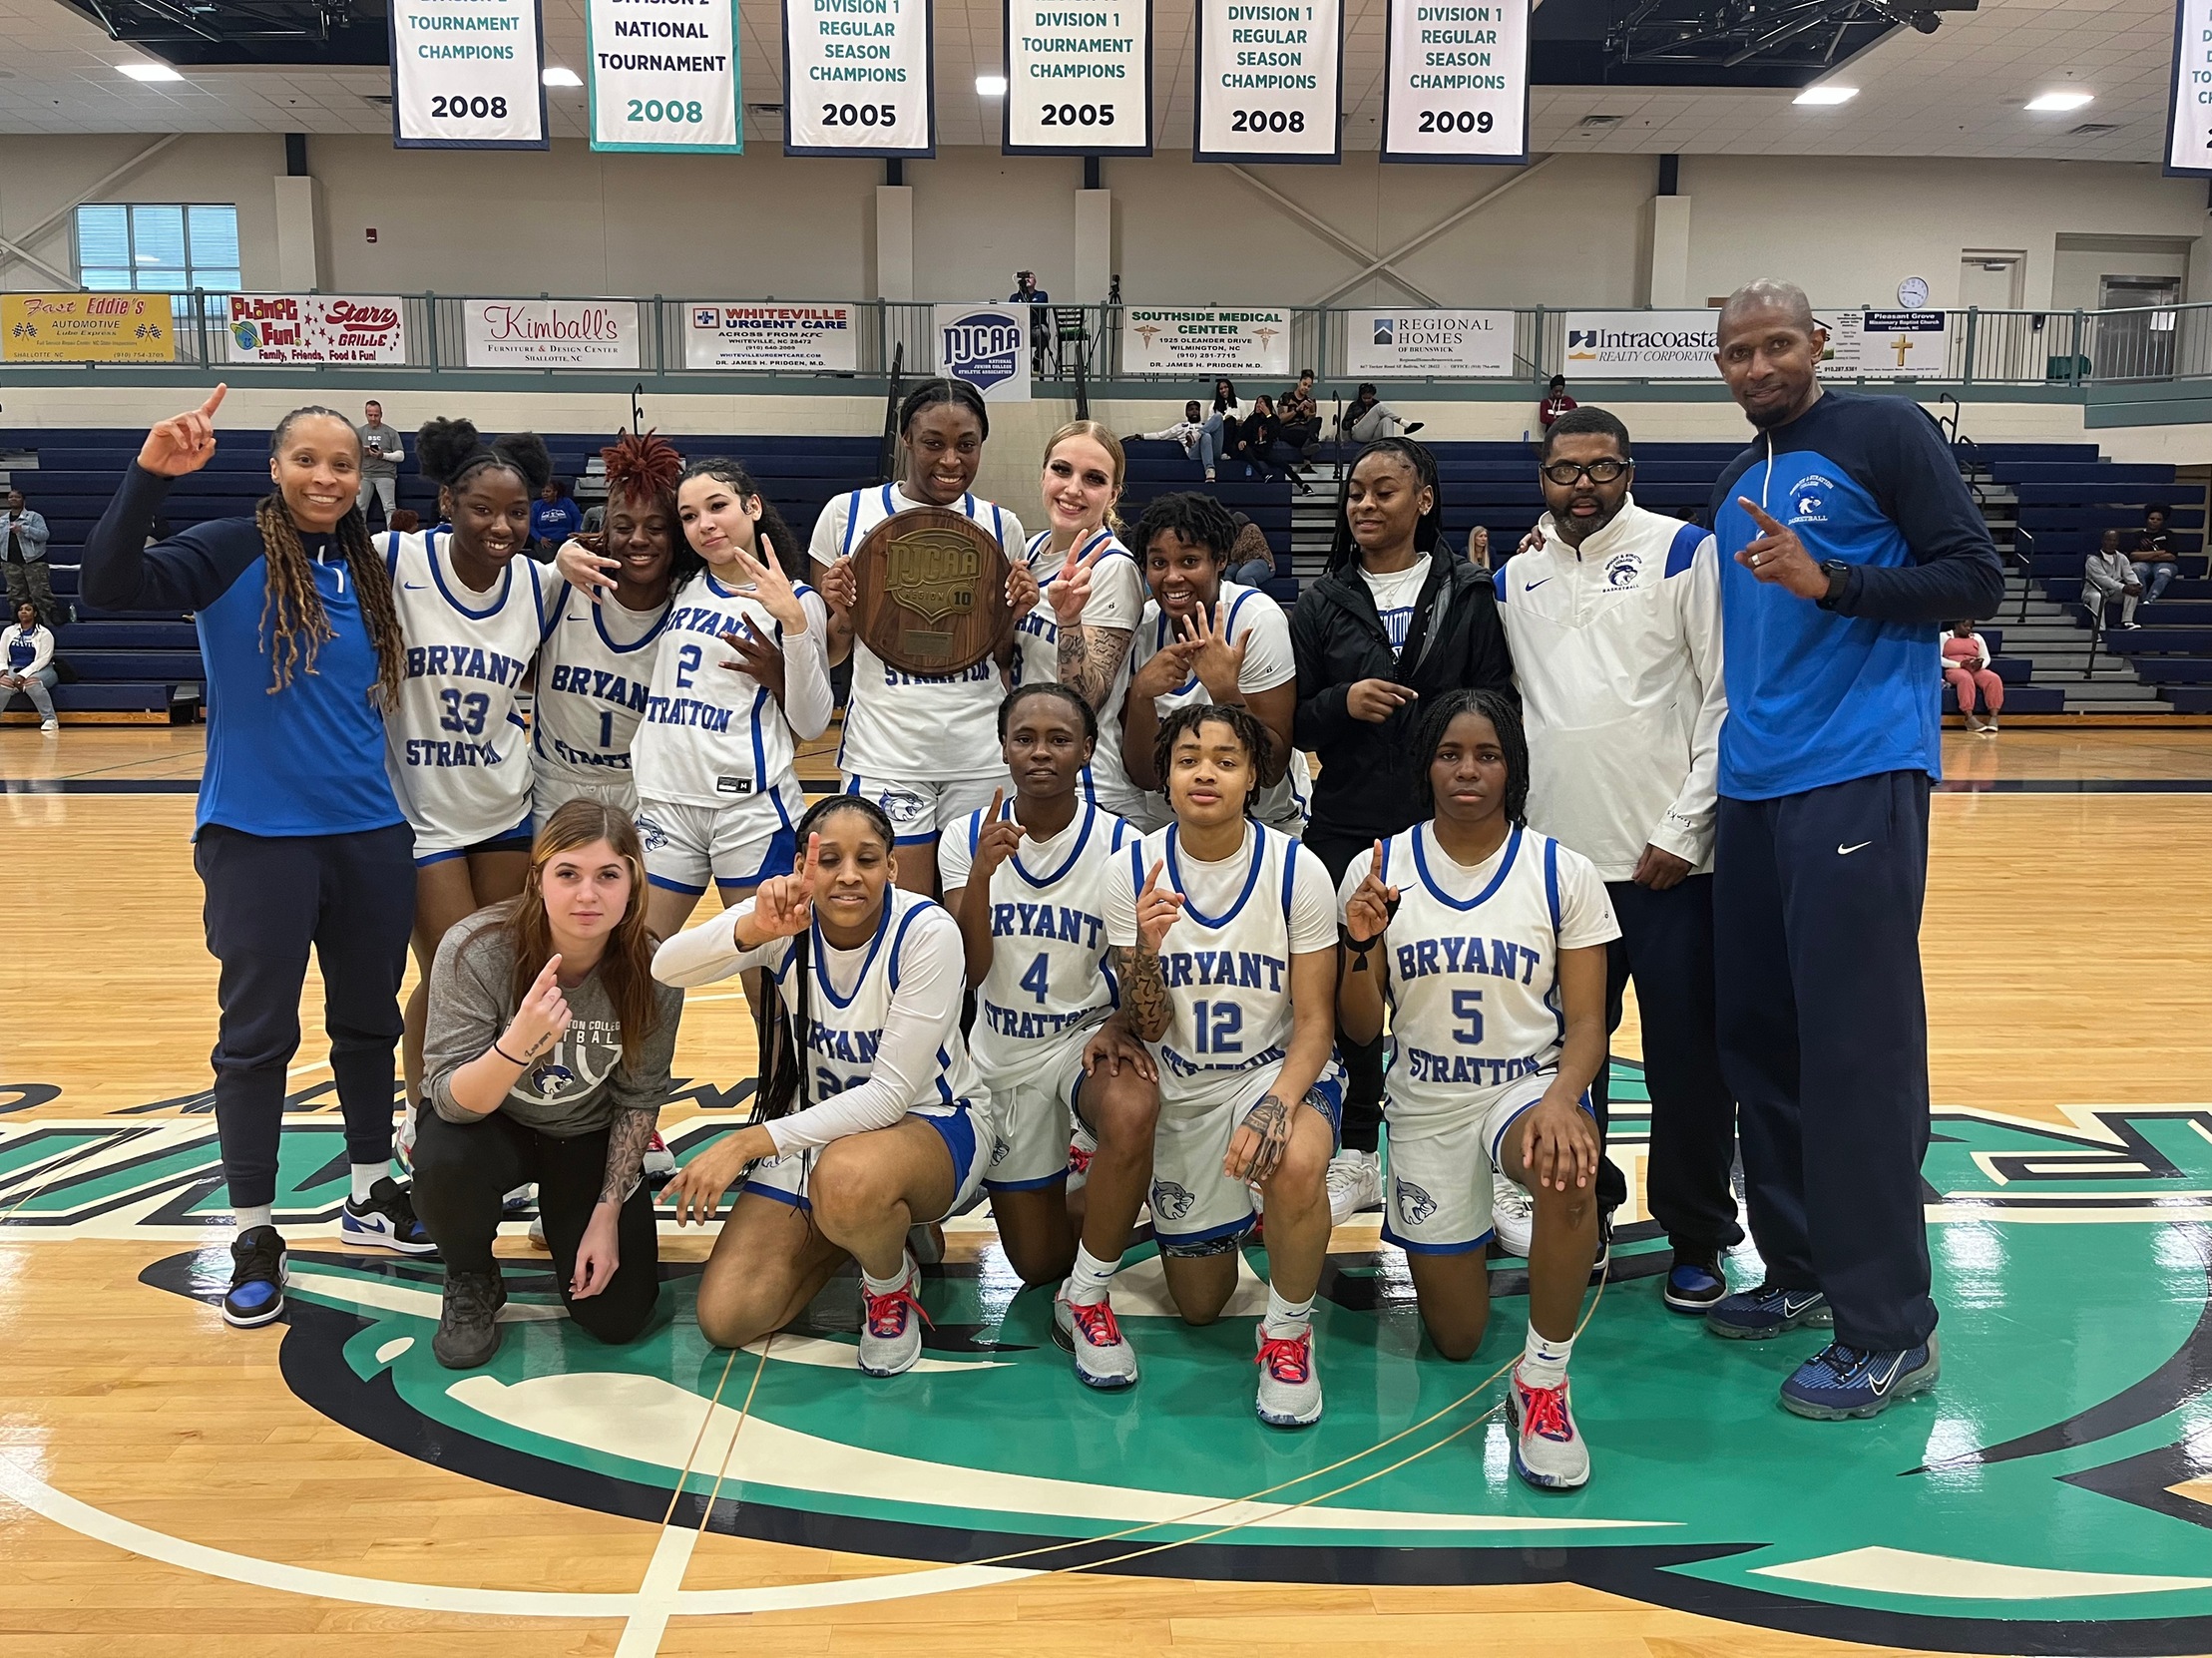 Bryant &amp; Stratton wins DII Women's Basketball Region/South Atlantic District Championship